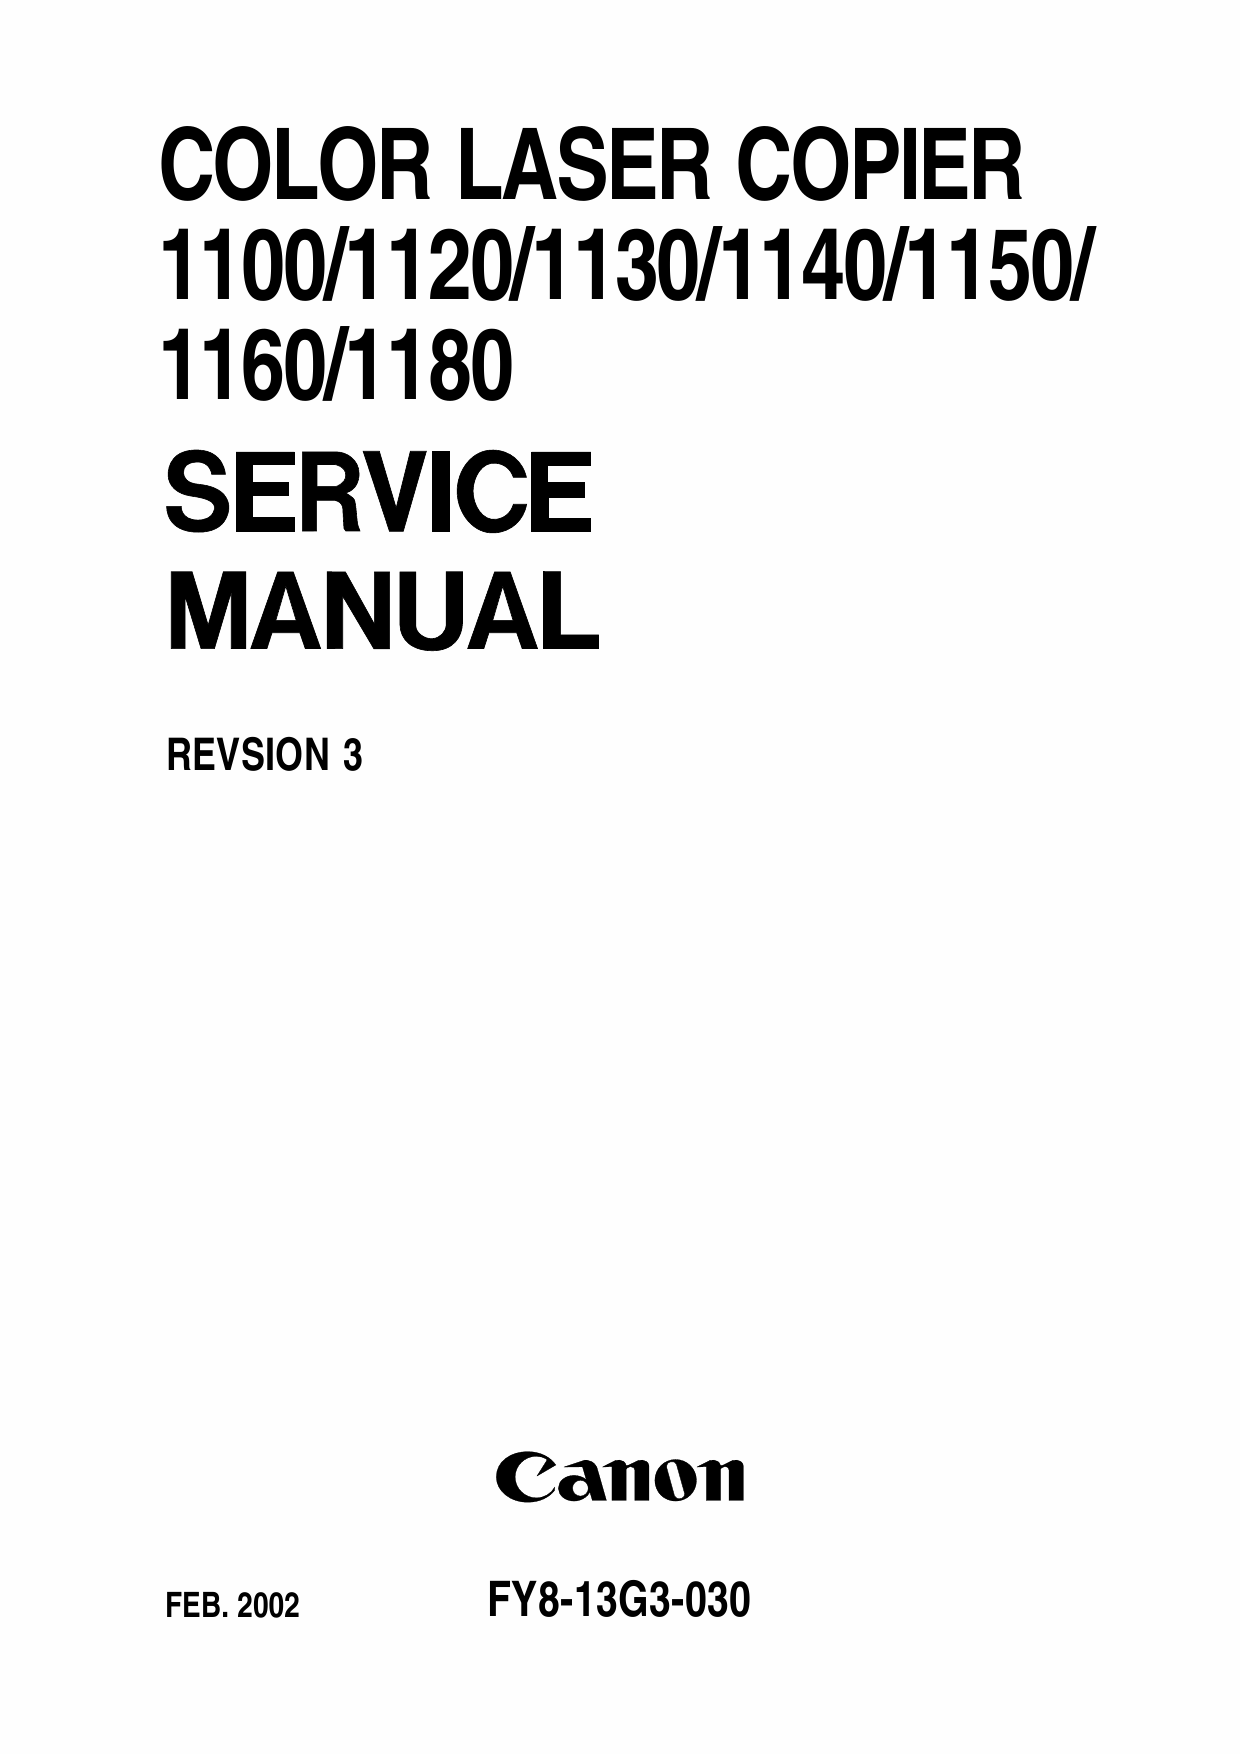 Canon ColorLaserCopier CLC-1100 1120 1130 1140 1150 1160 1180 Parts and Service Manual-1